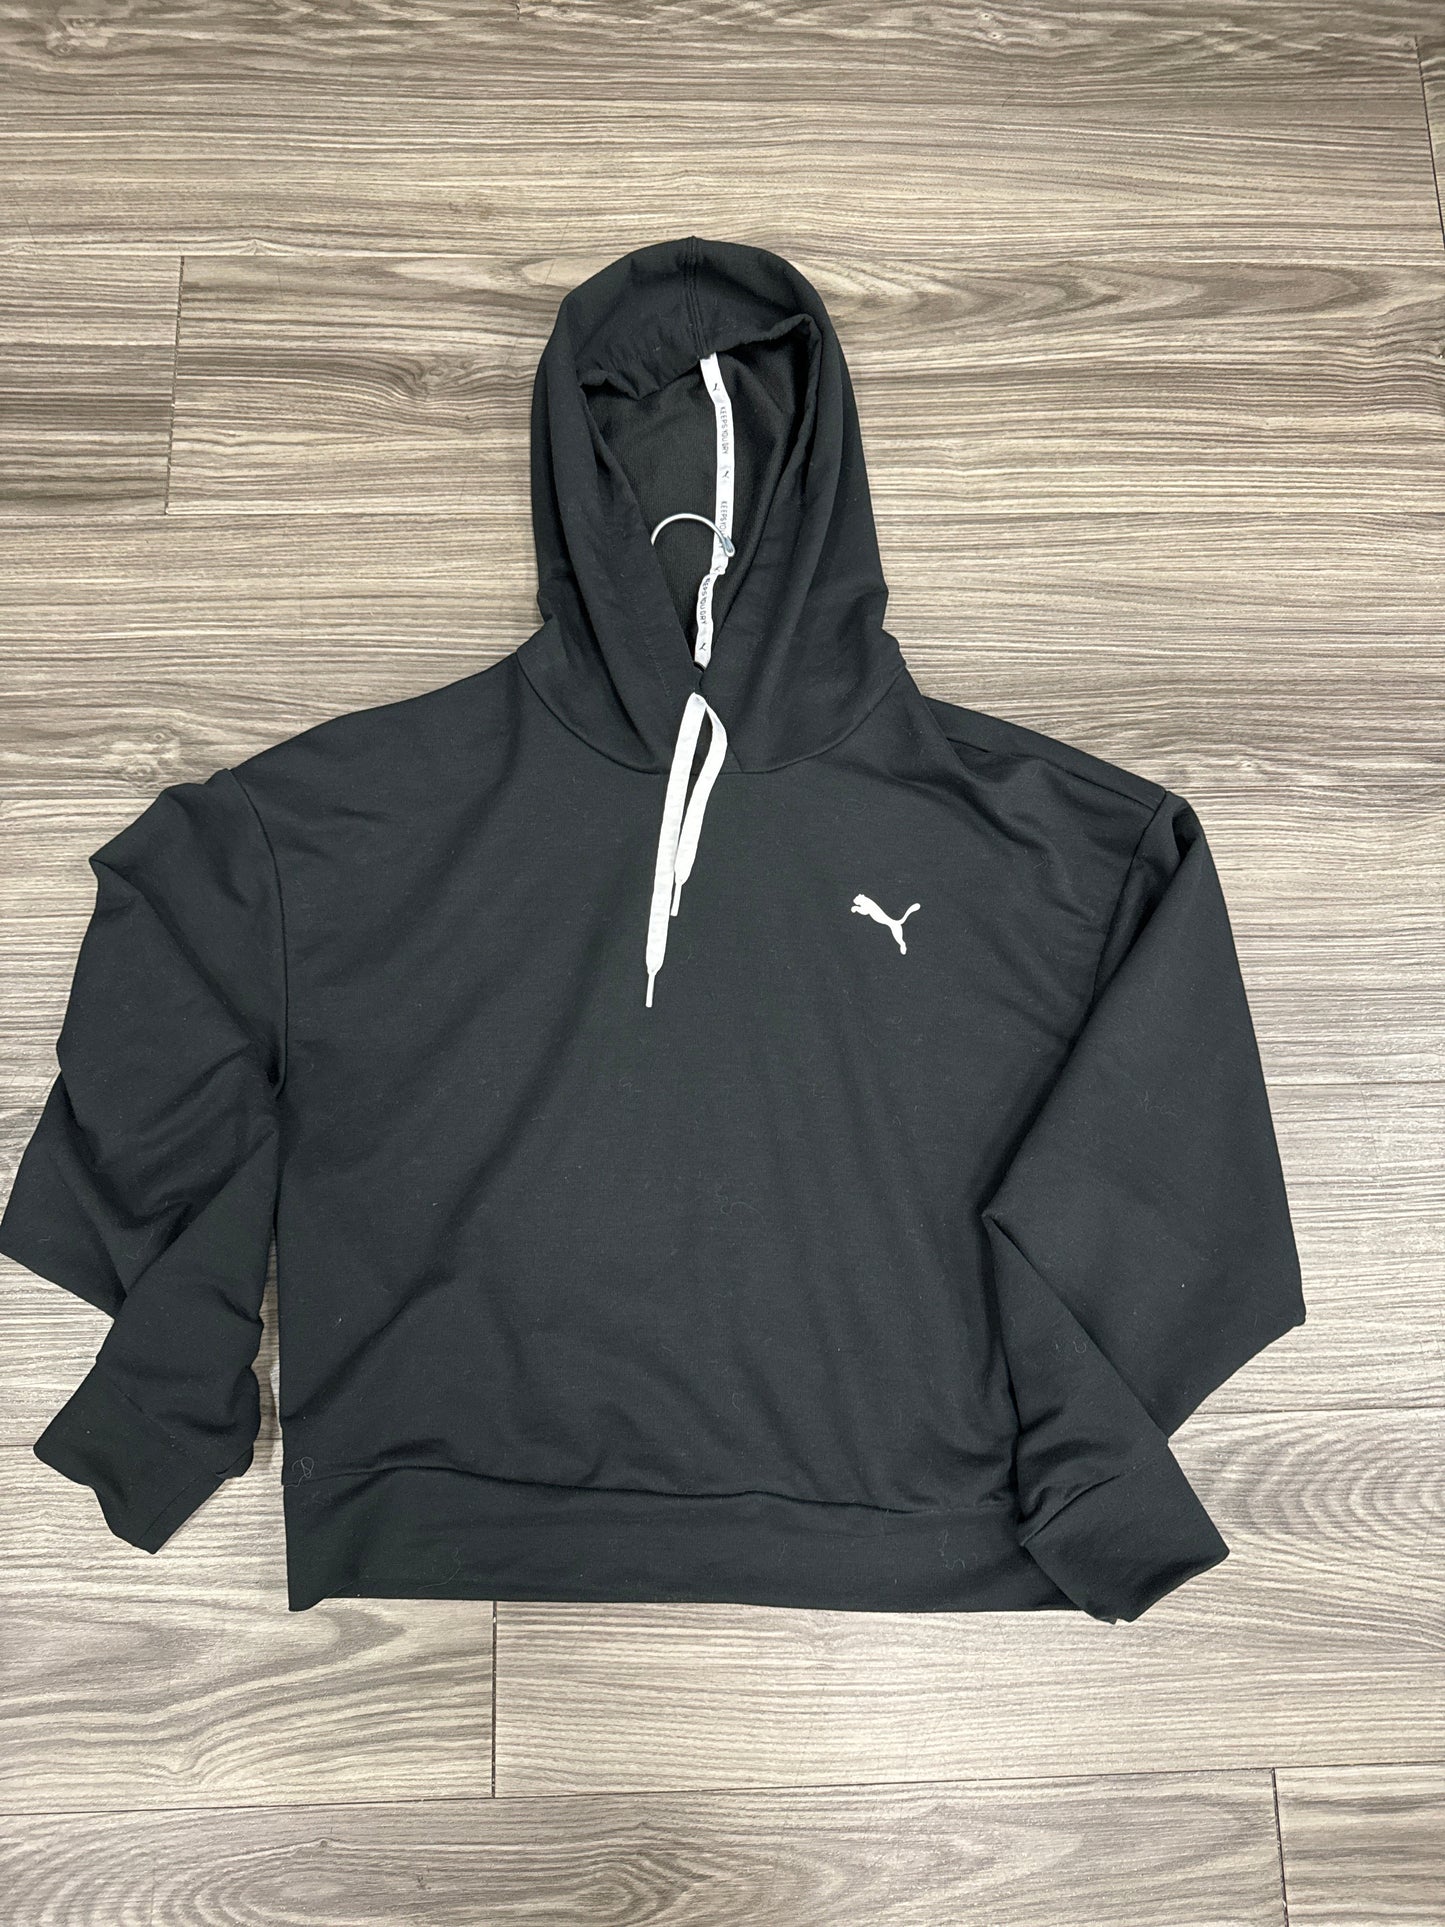 Athletic Sweatshirt Hoodie By Puma  Size: S